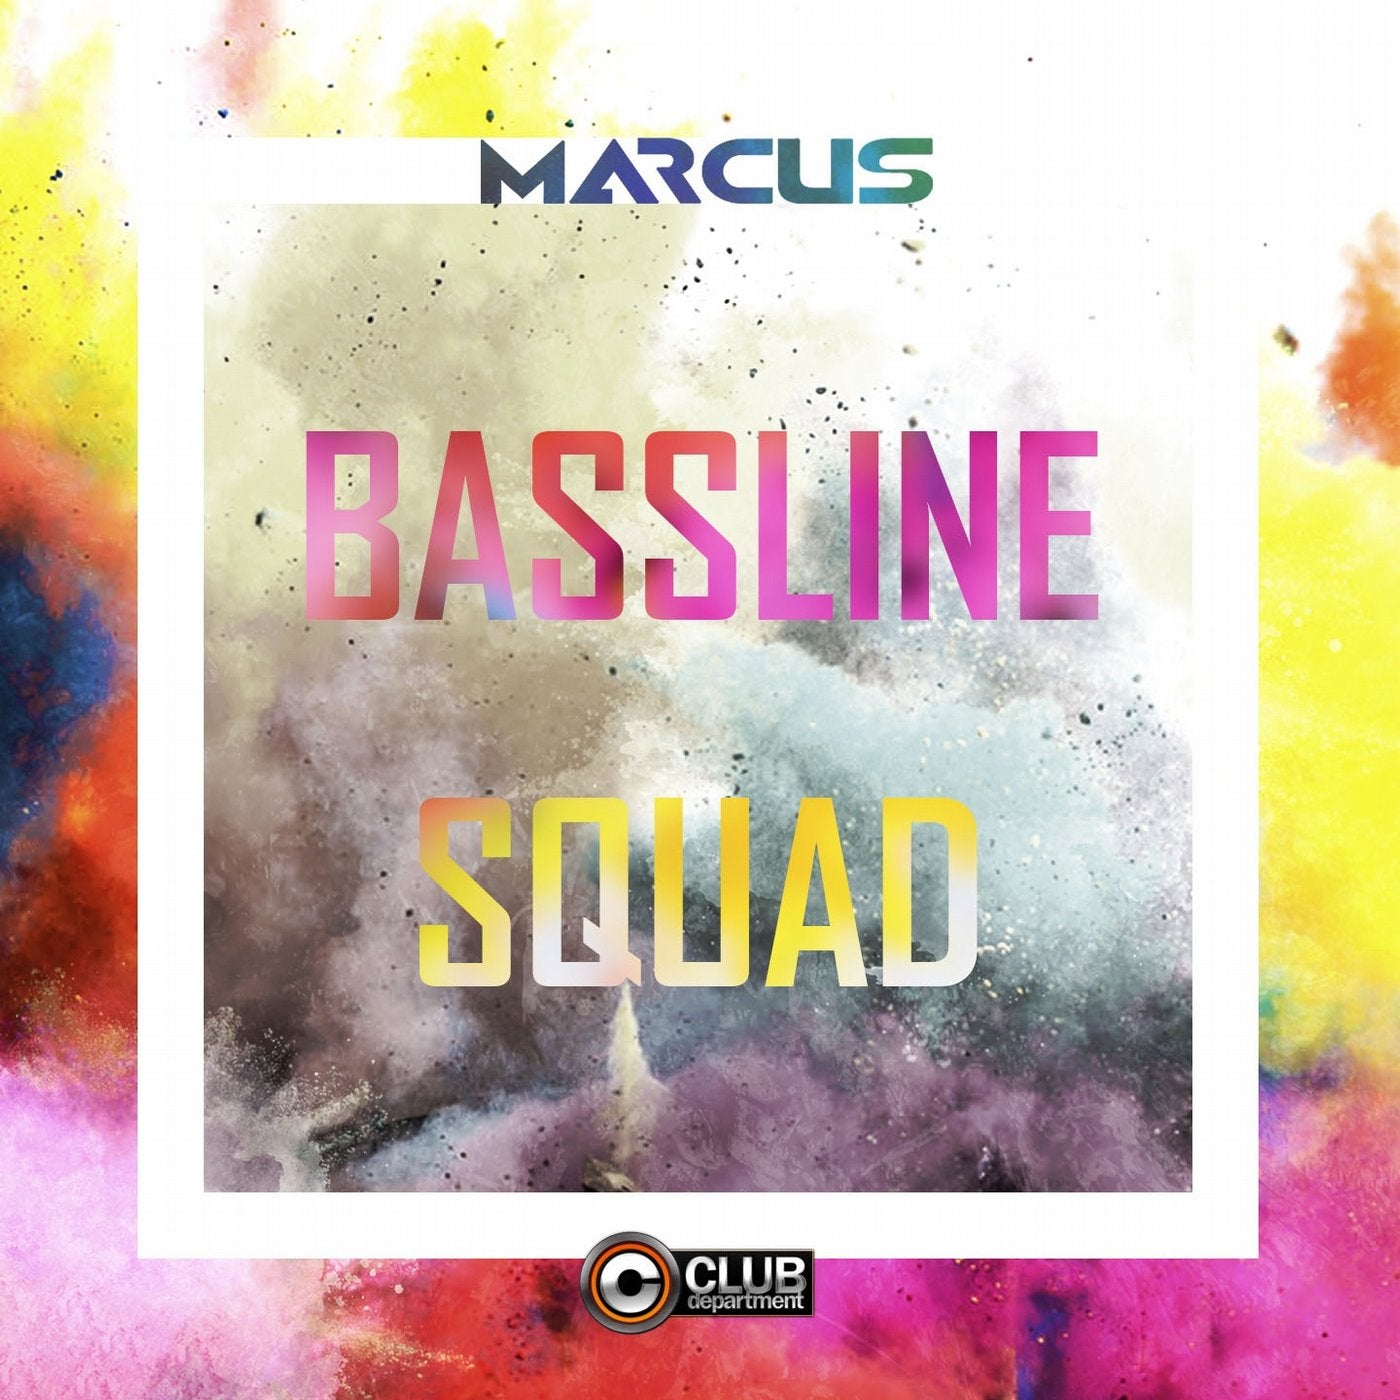 Bassline Squad